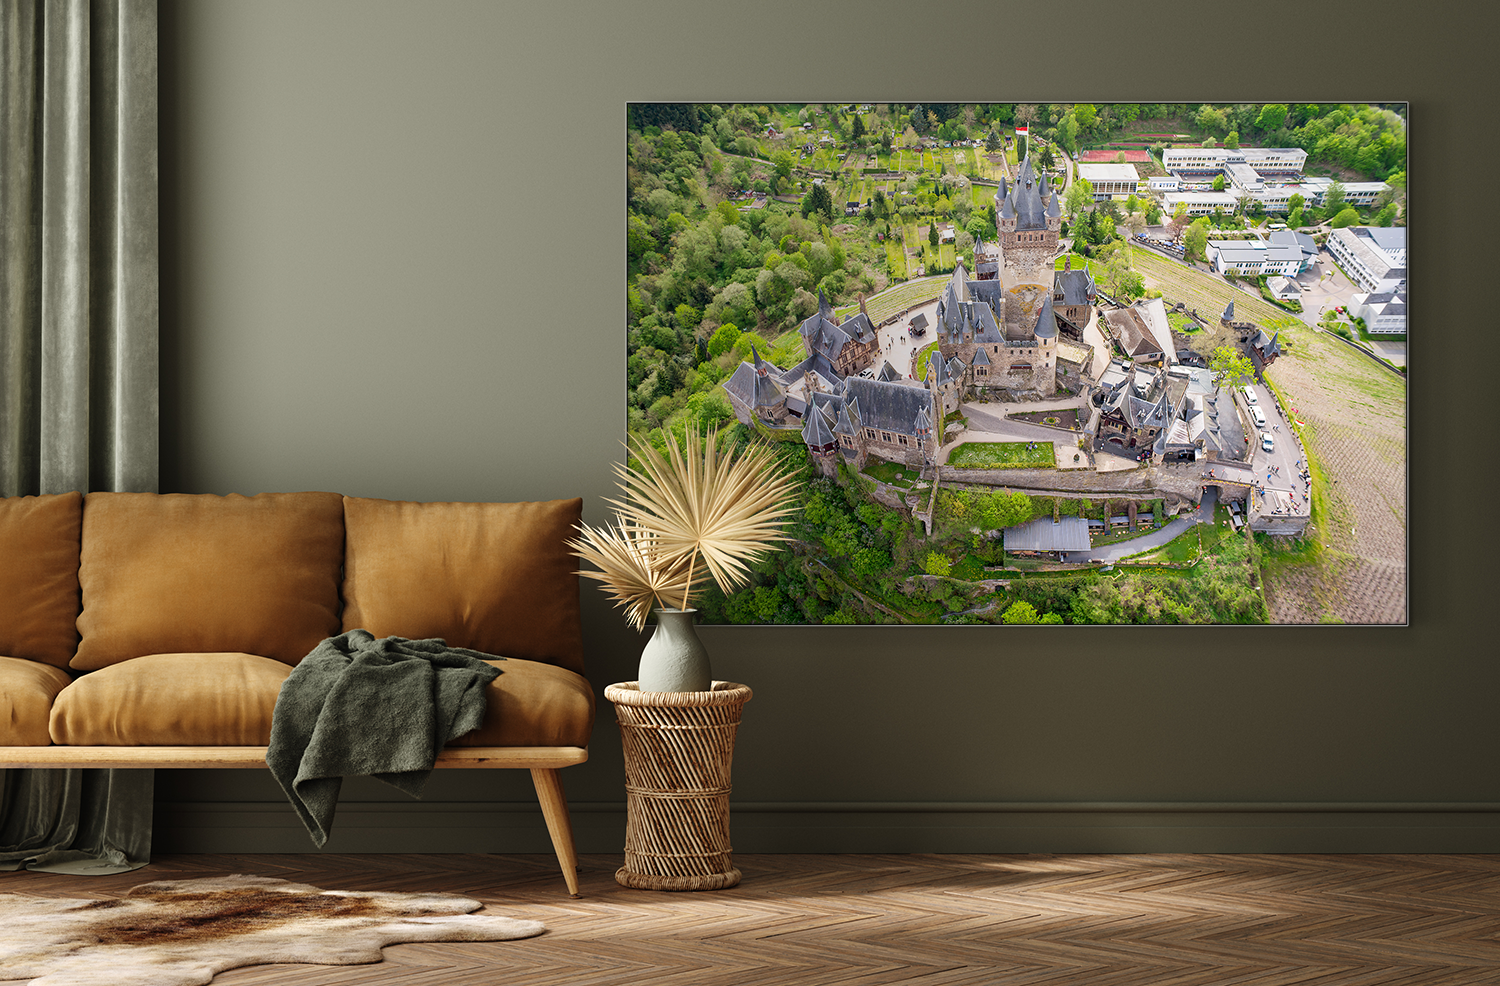 Burg Cochem